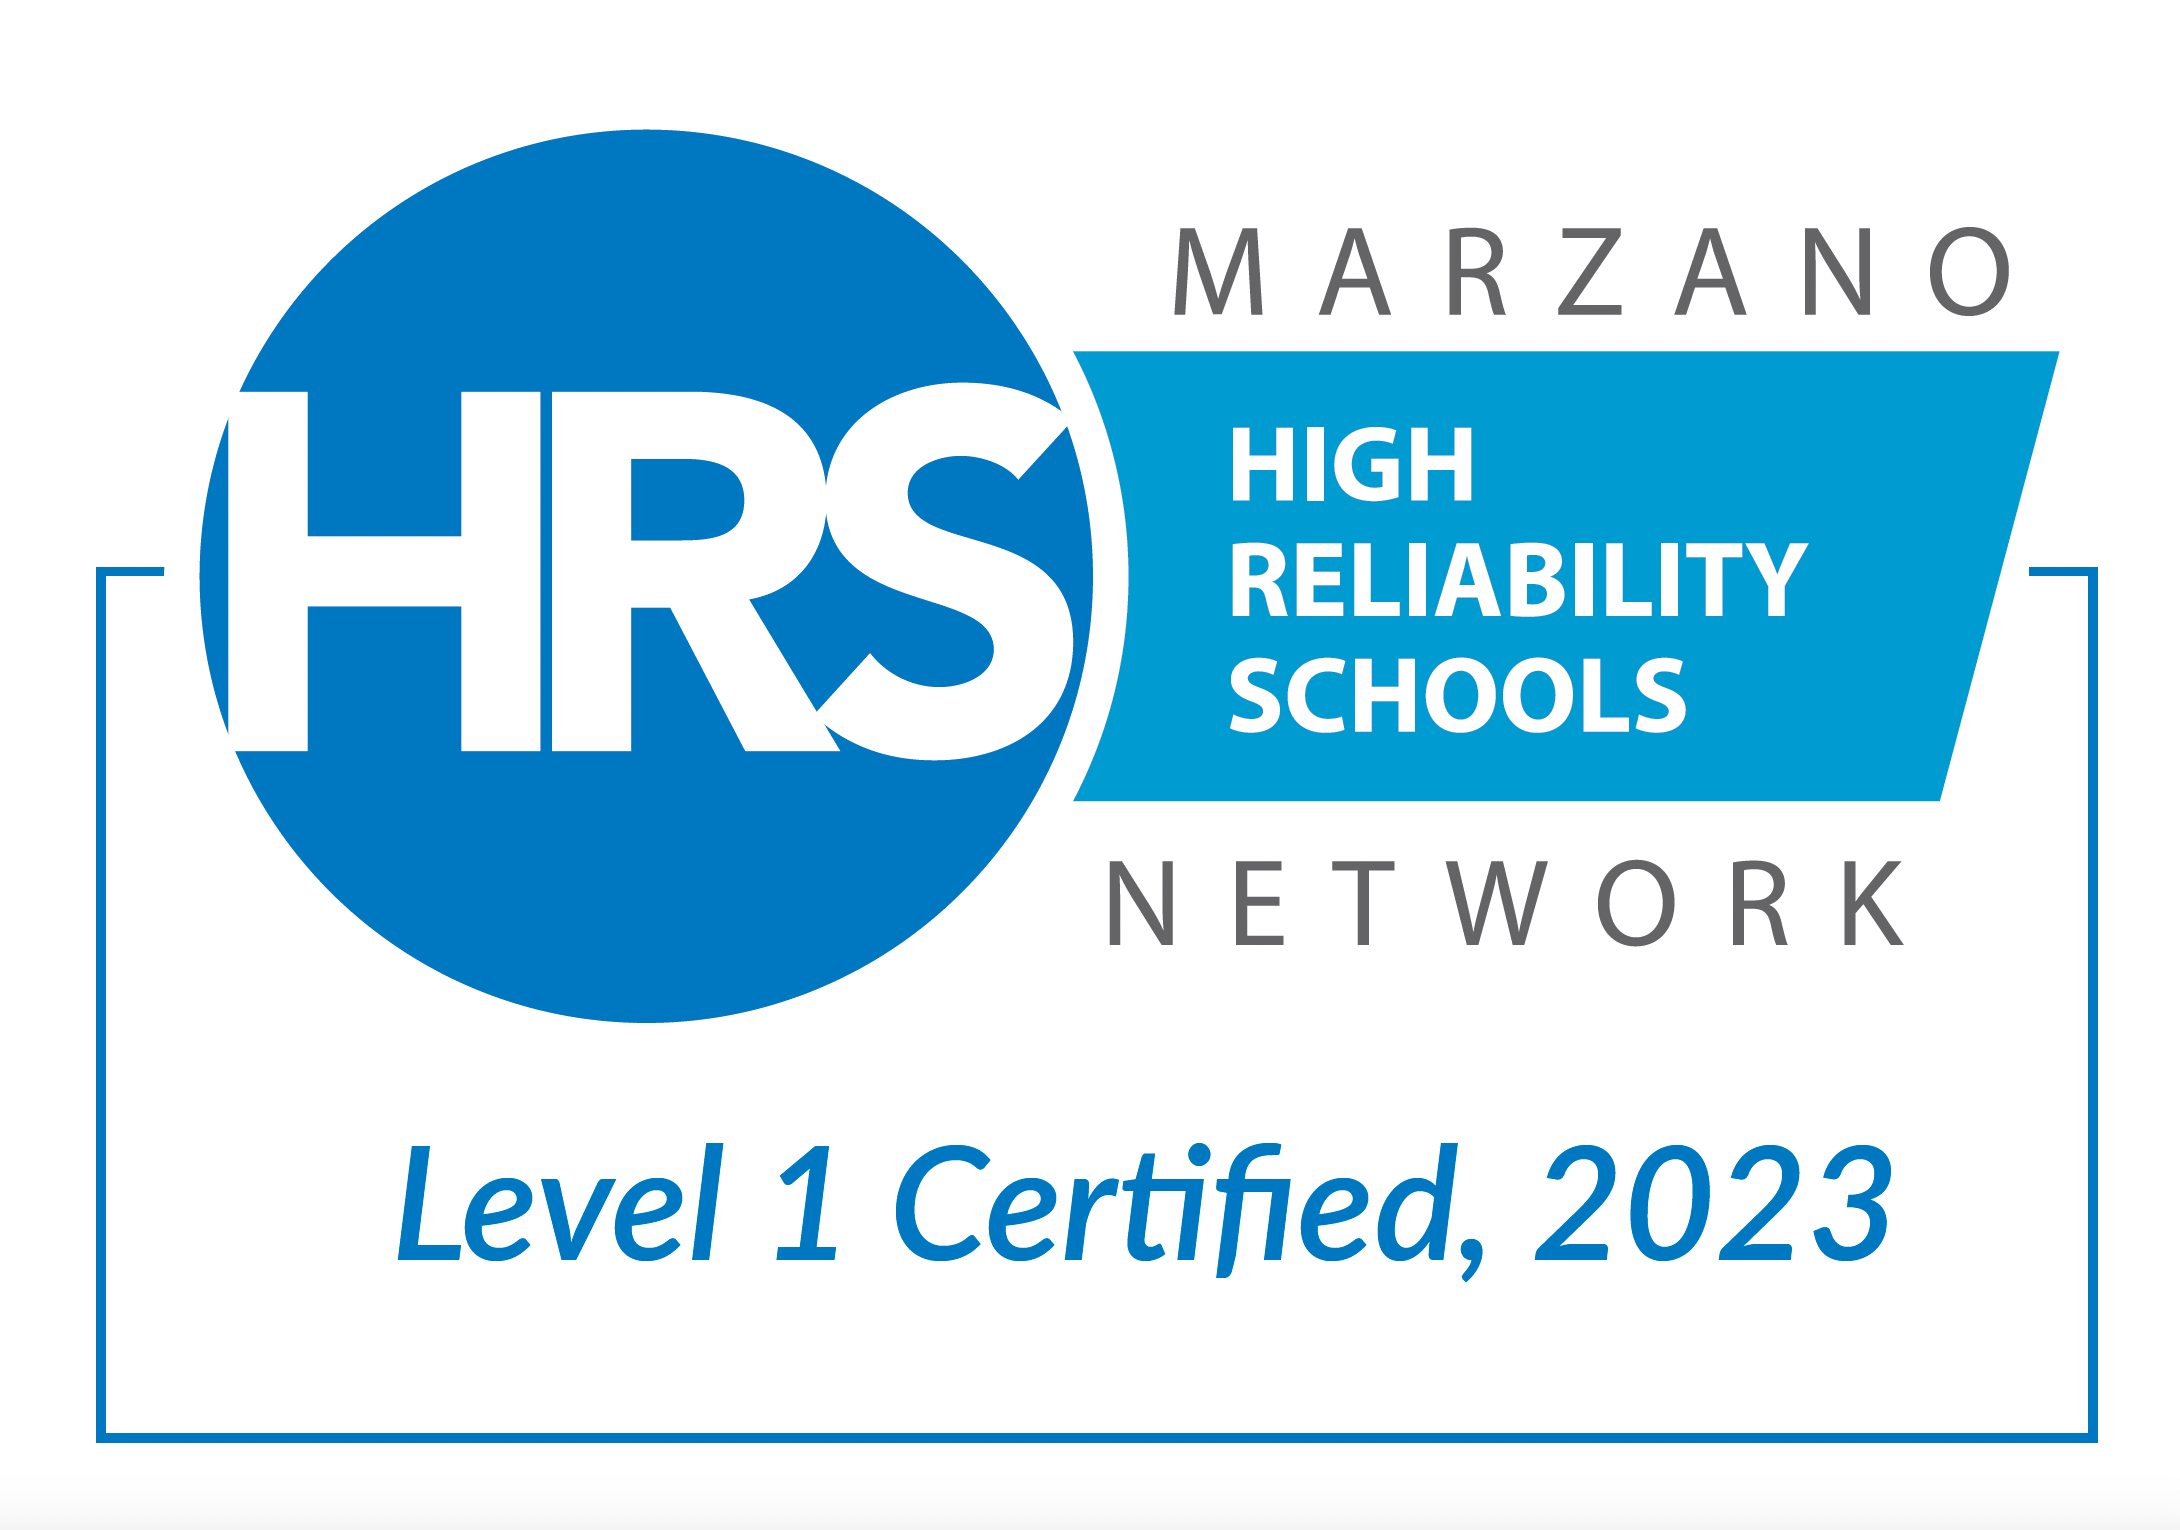 marzano high reliability schools newtwork level 1 certified 2023 badge